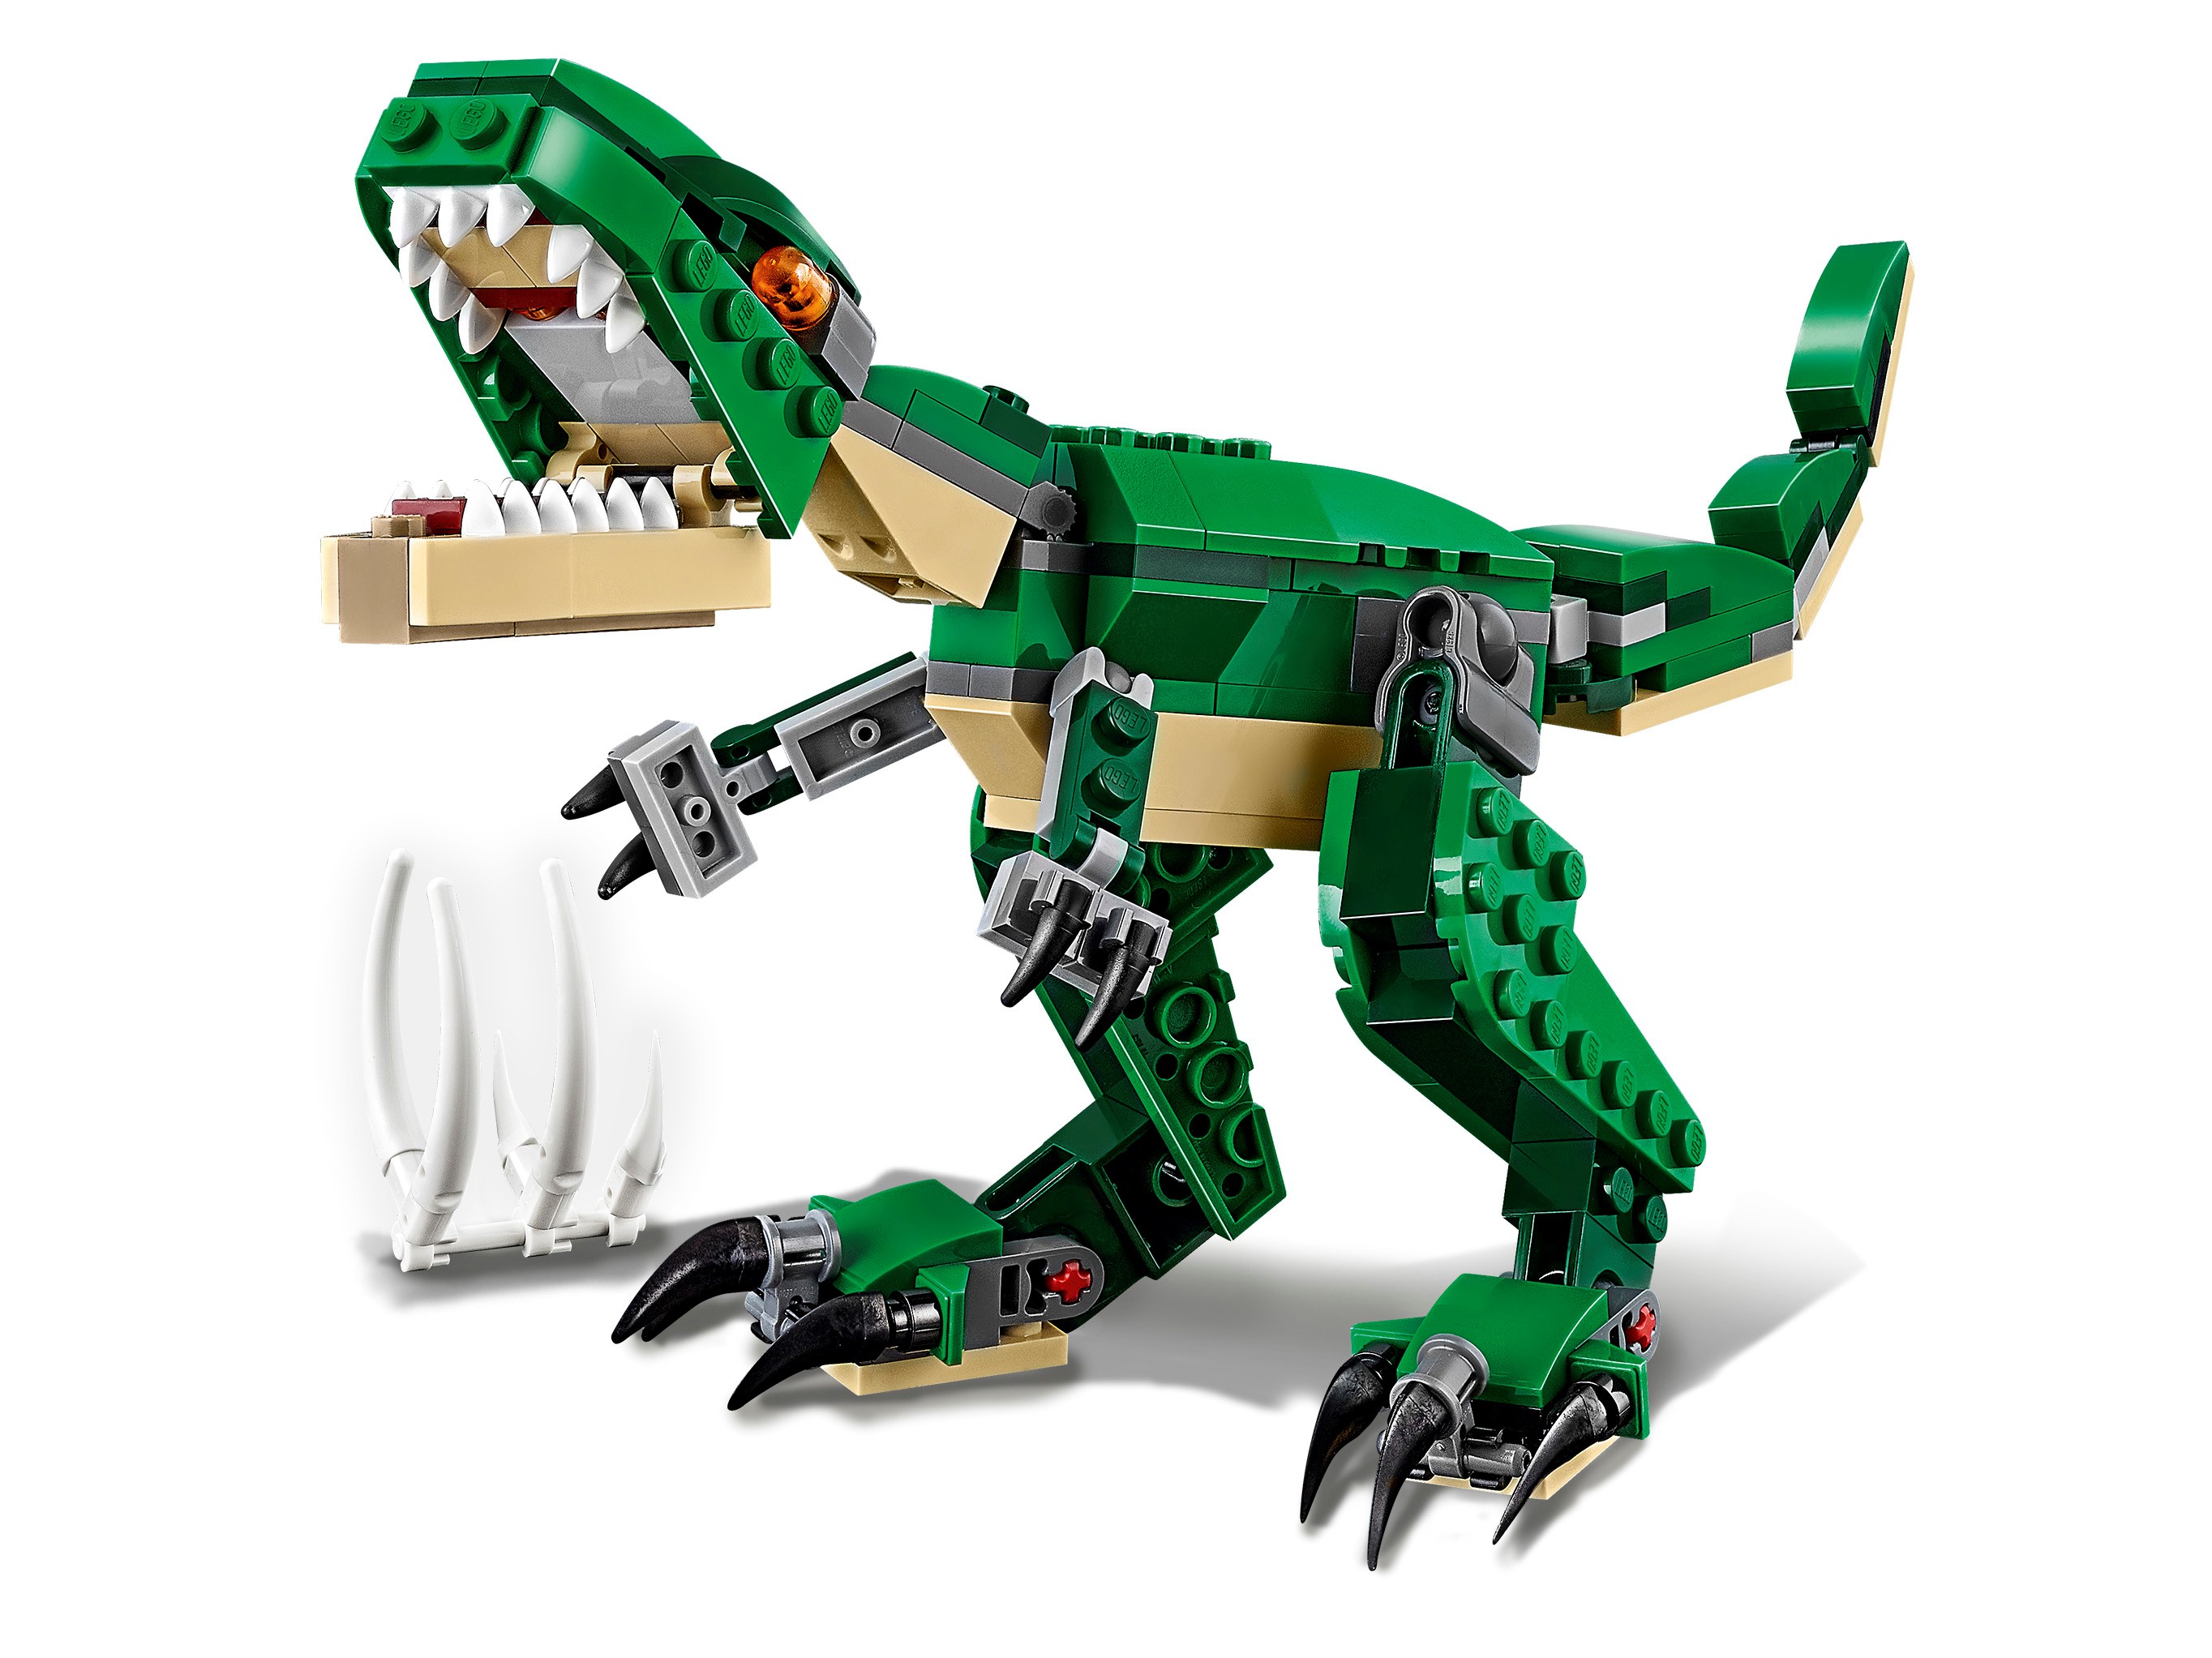 LEGO Creator 31058 Le Dinosaure Féroce 3 en 1